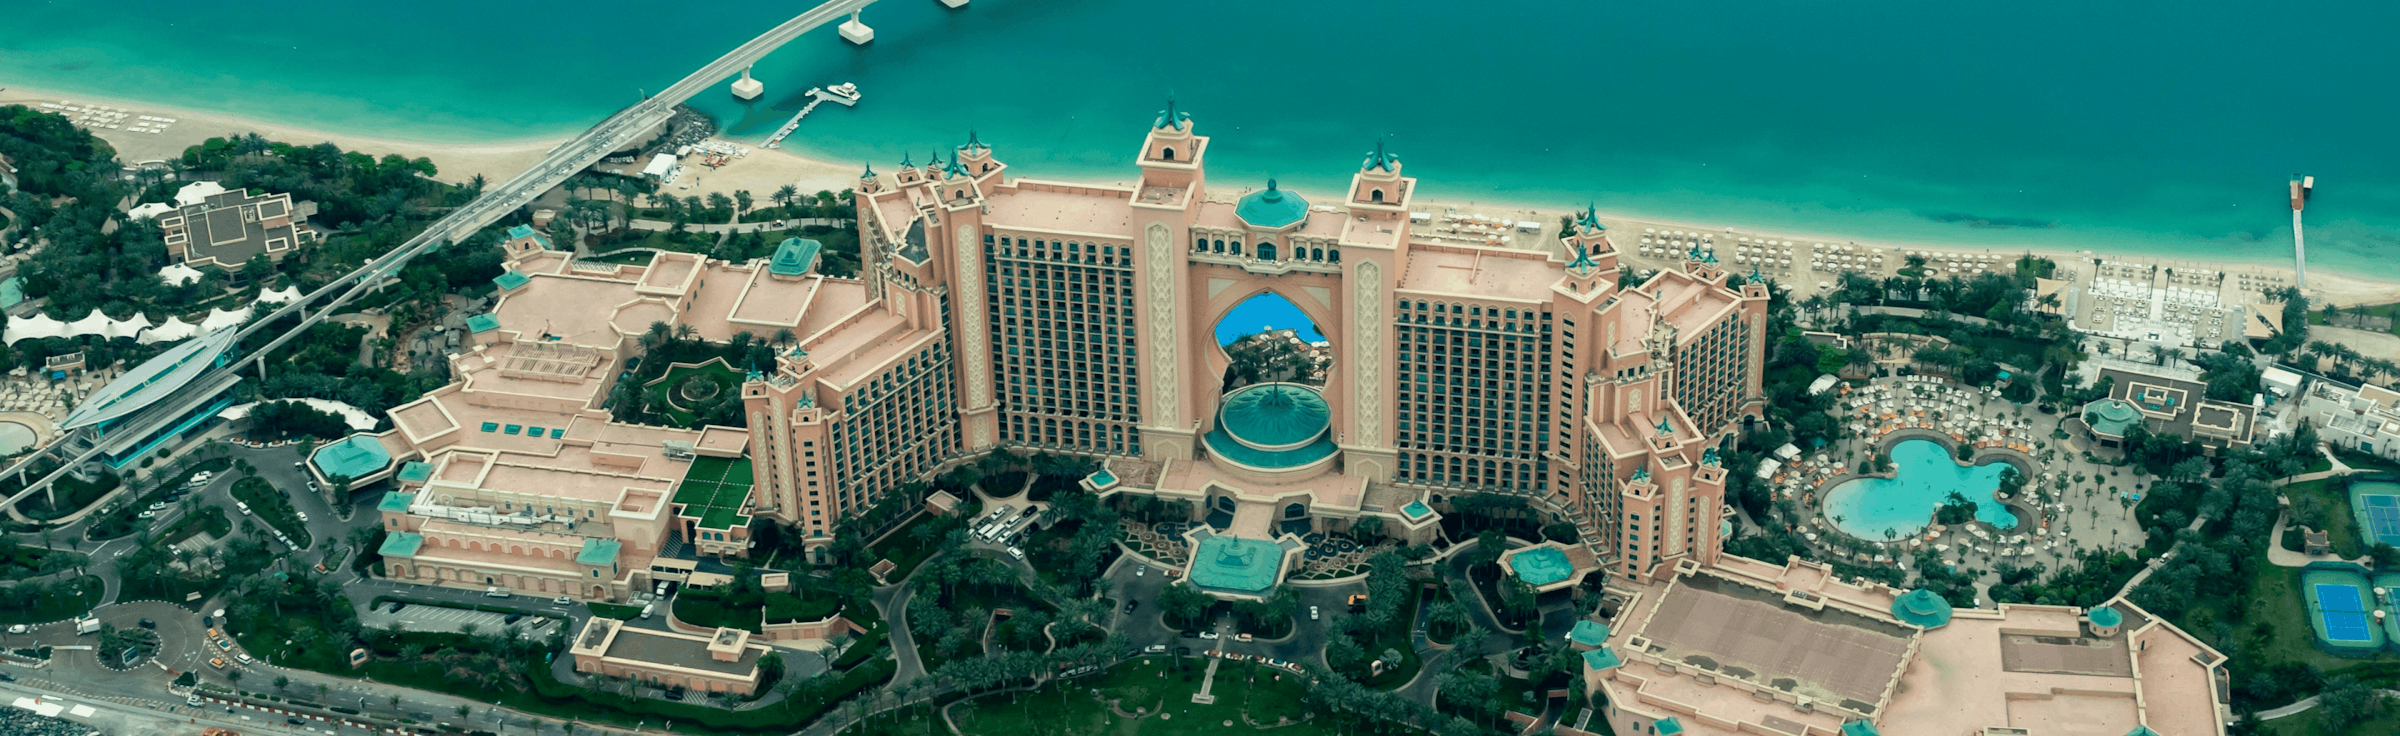 Honeymoon vacations in Dubai